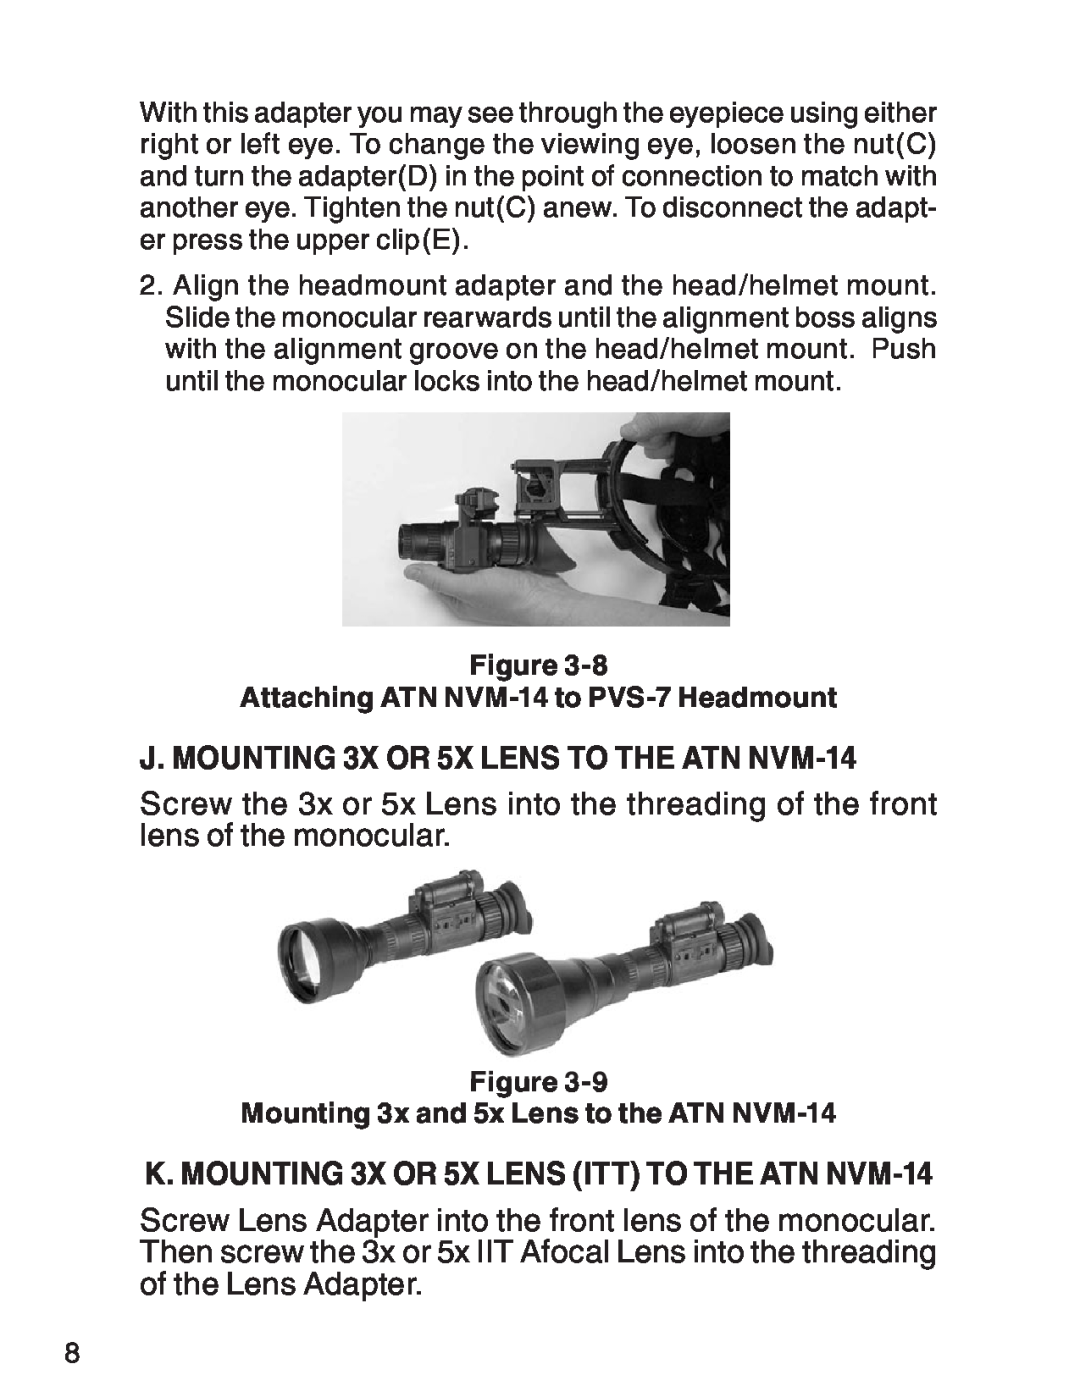 ATN manual J. Mounting 3x or 5X Lens to the ATN NVM-14, K. Mounting 3x or 5X Lens ITT to the ATN NVM-14 